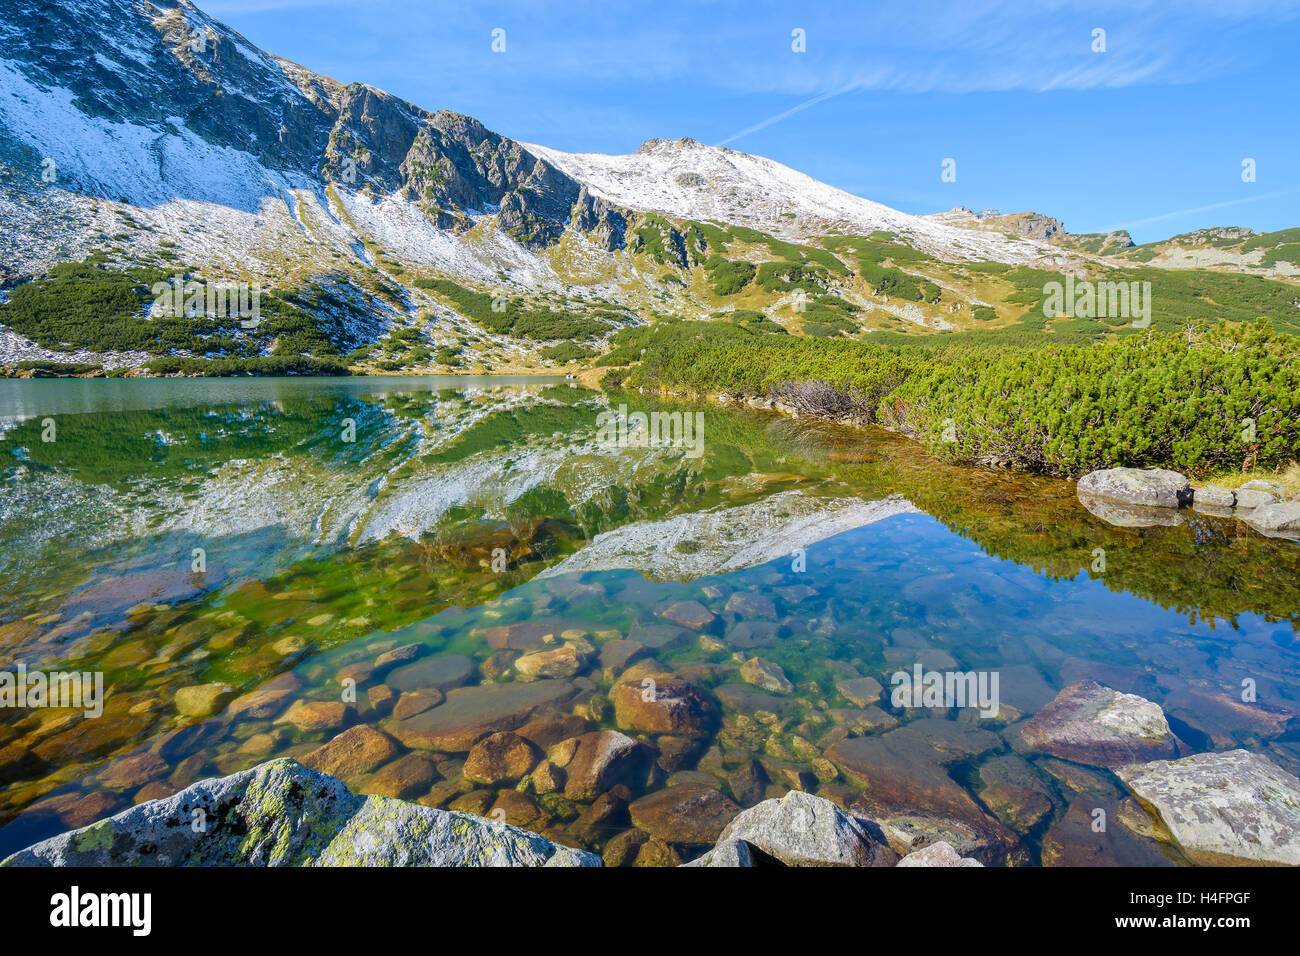 Grünes Wasser Bergsee im Gasienicowa Tal, hohen Tatra, Polen Stockfoto